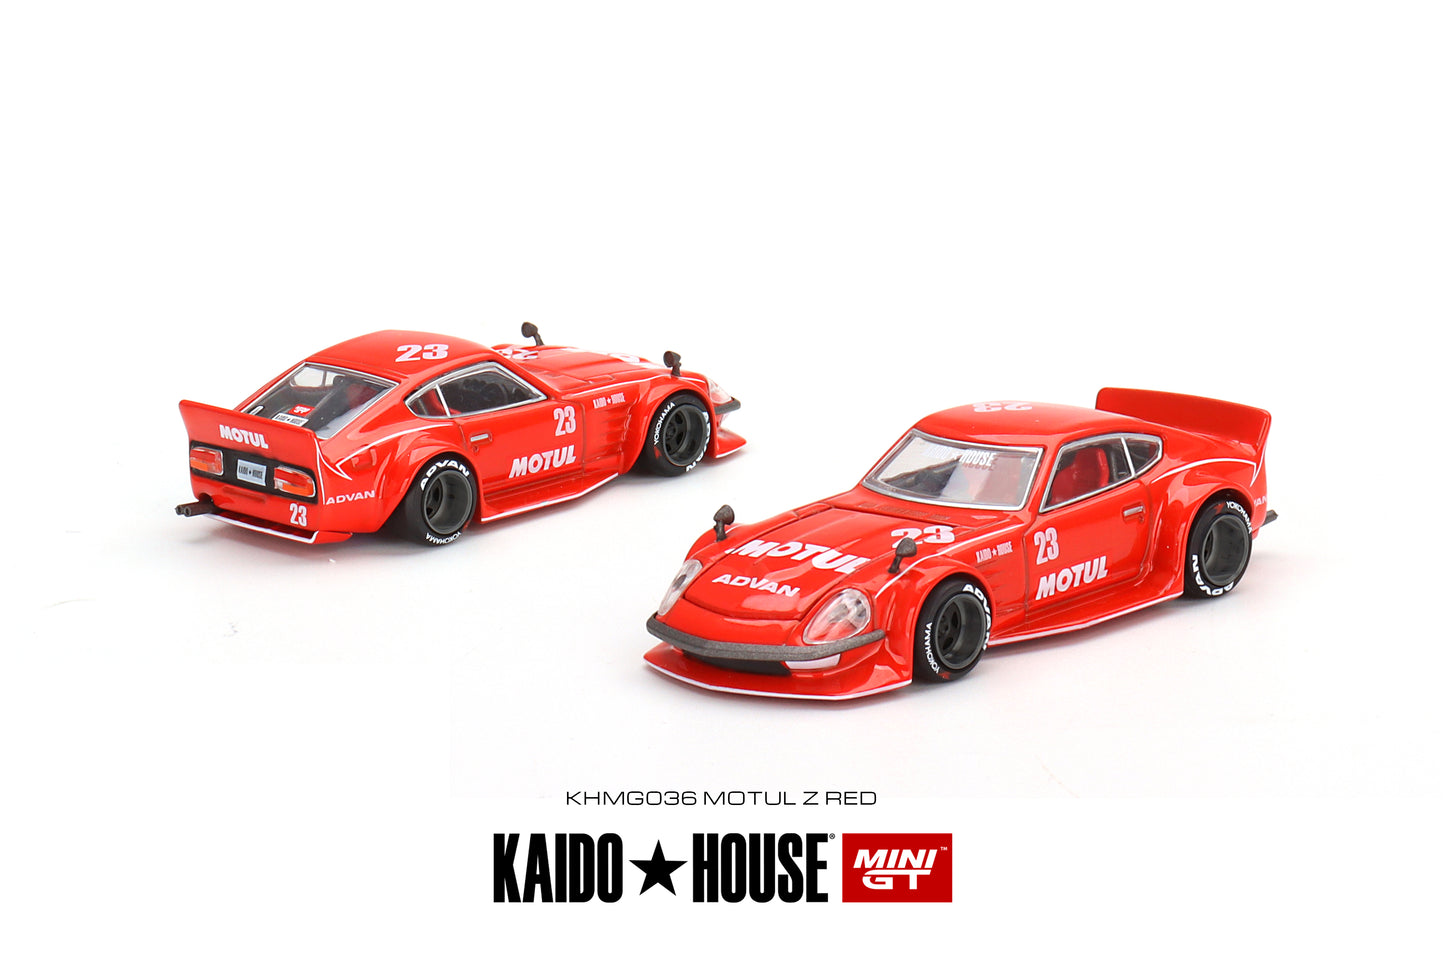 Mini GT x Kaido House No.036 Datsun Kaido Fairlady Z Motul V2